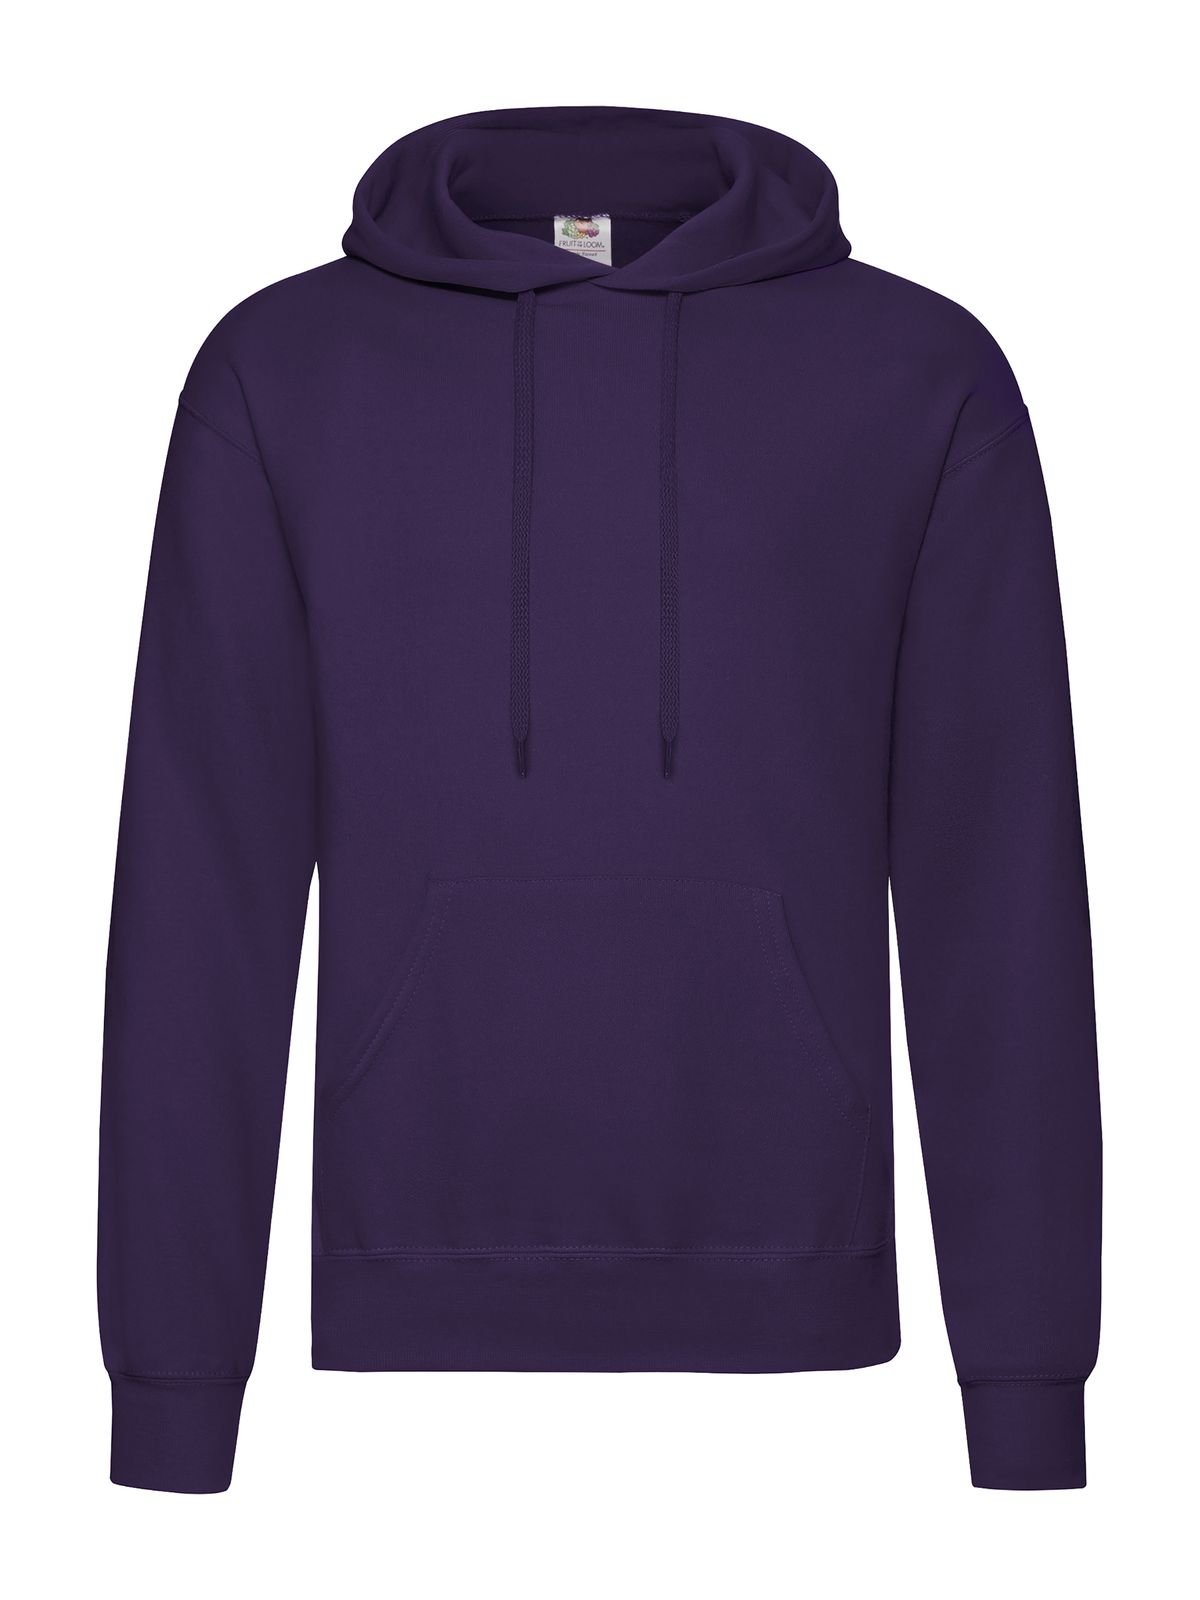 classic-hooded-sweat-purple.webp